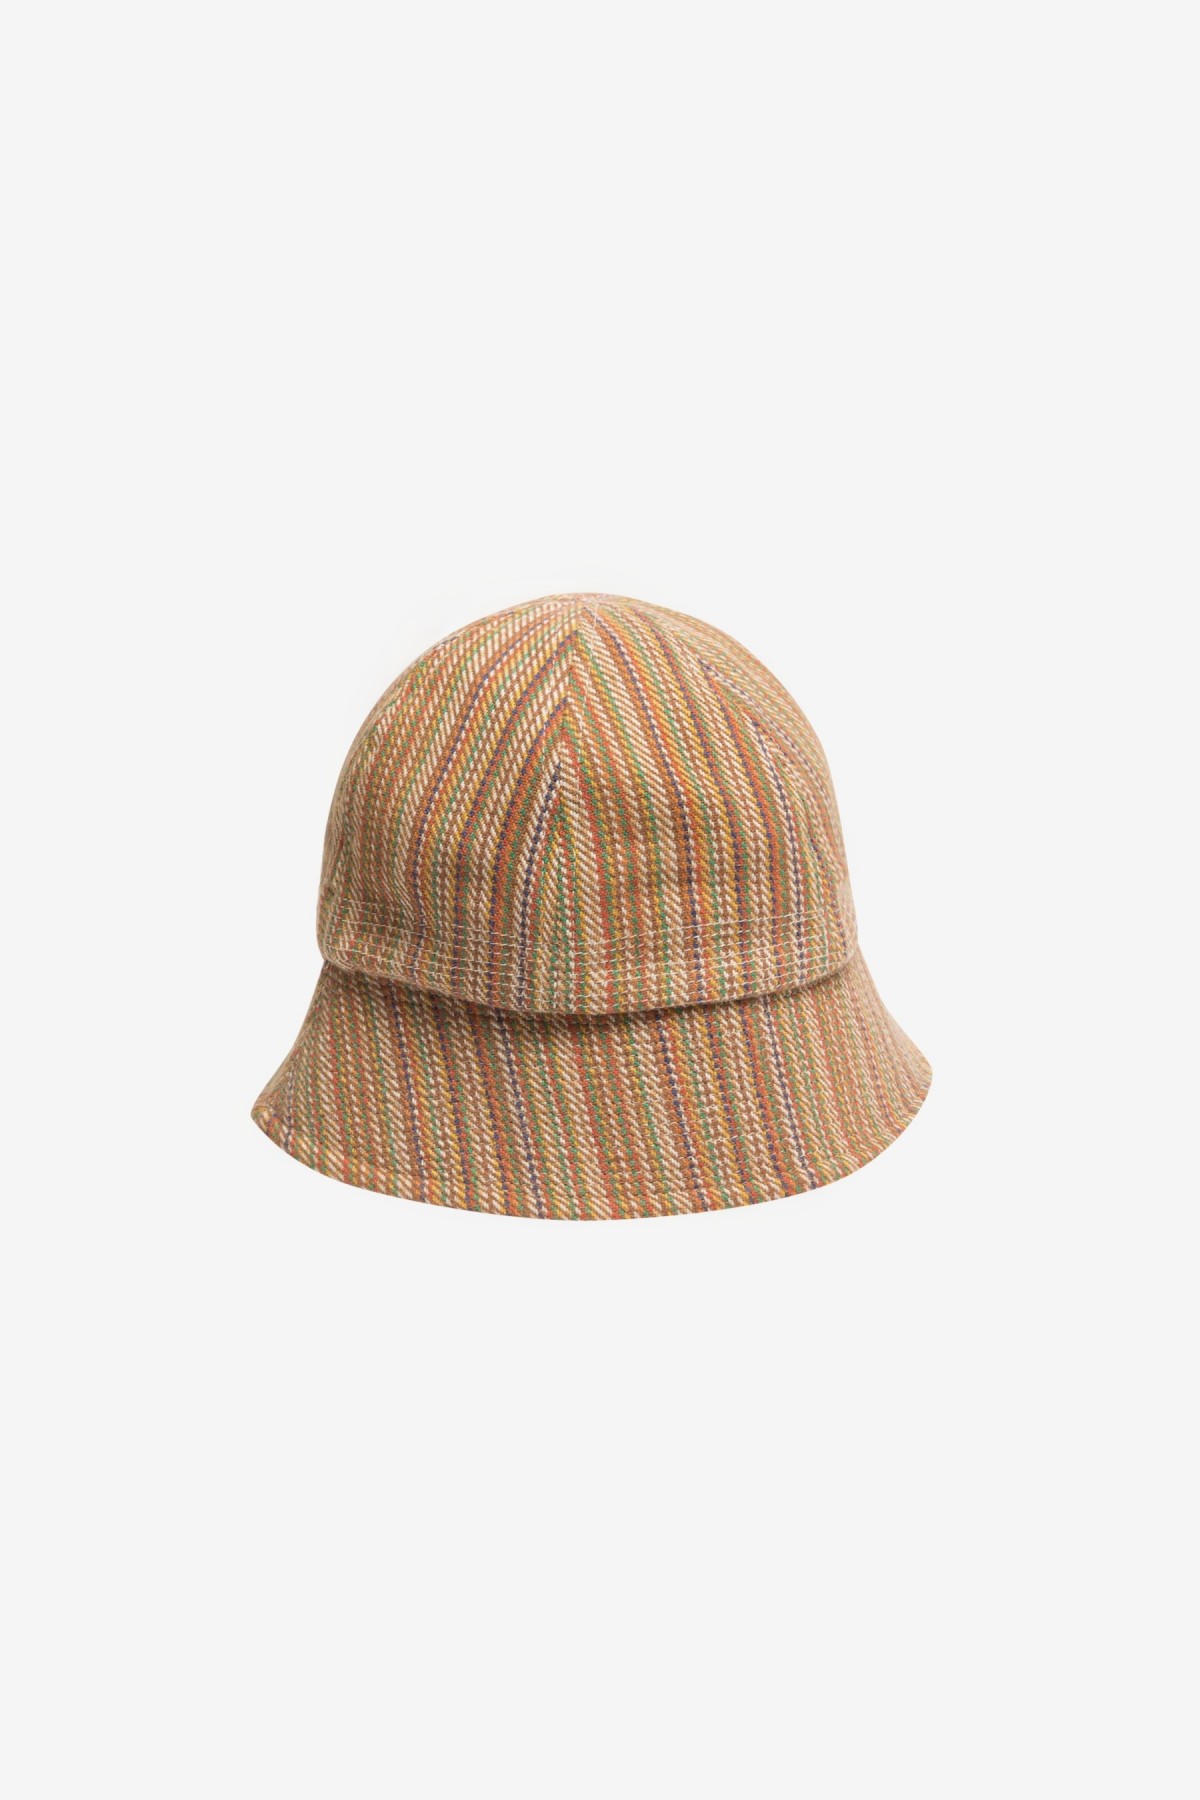 YMC You Must Create Gilligan Hat in Multi